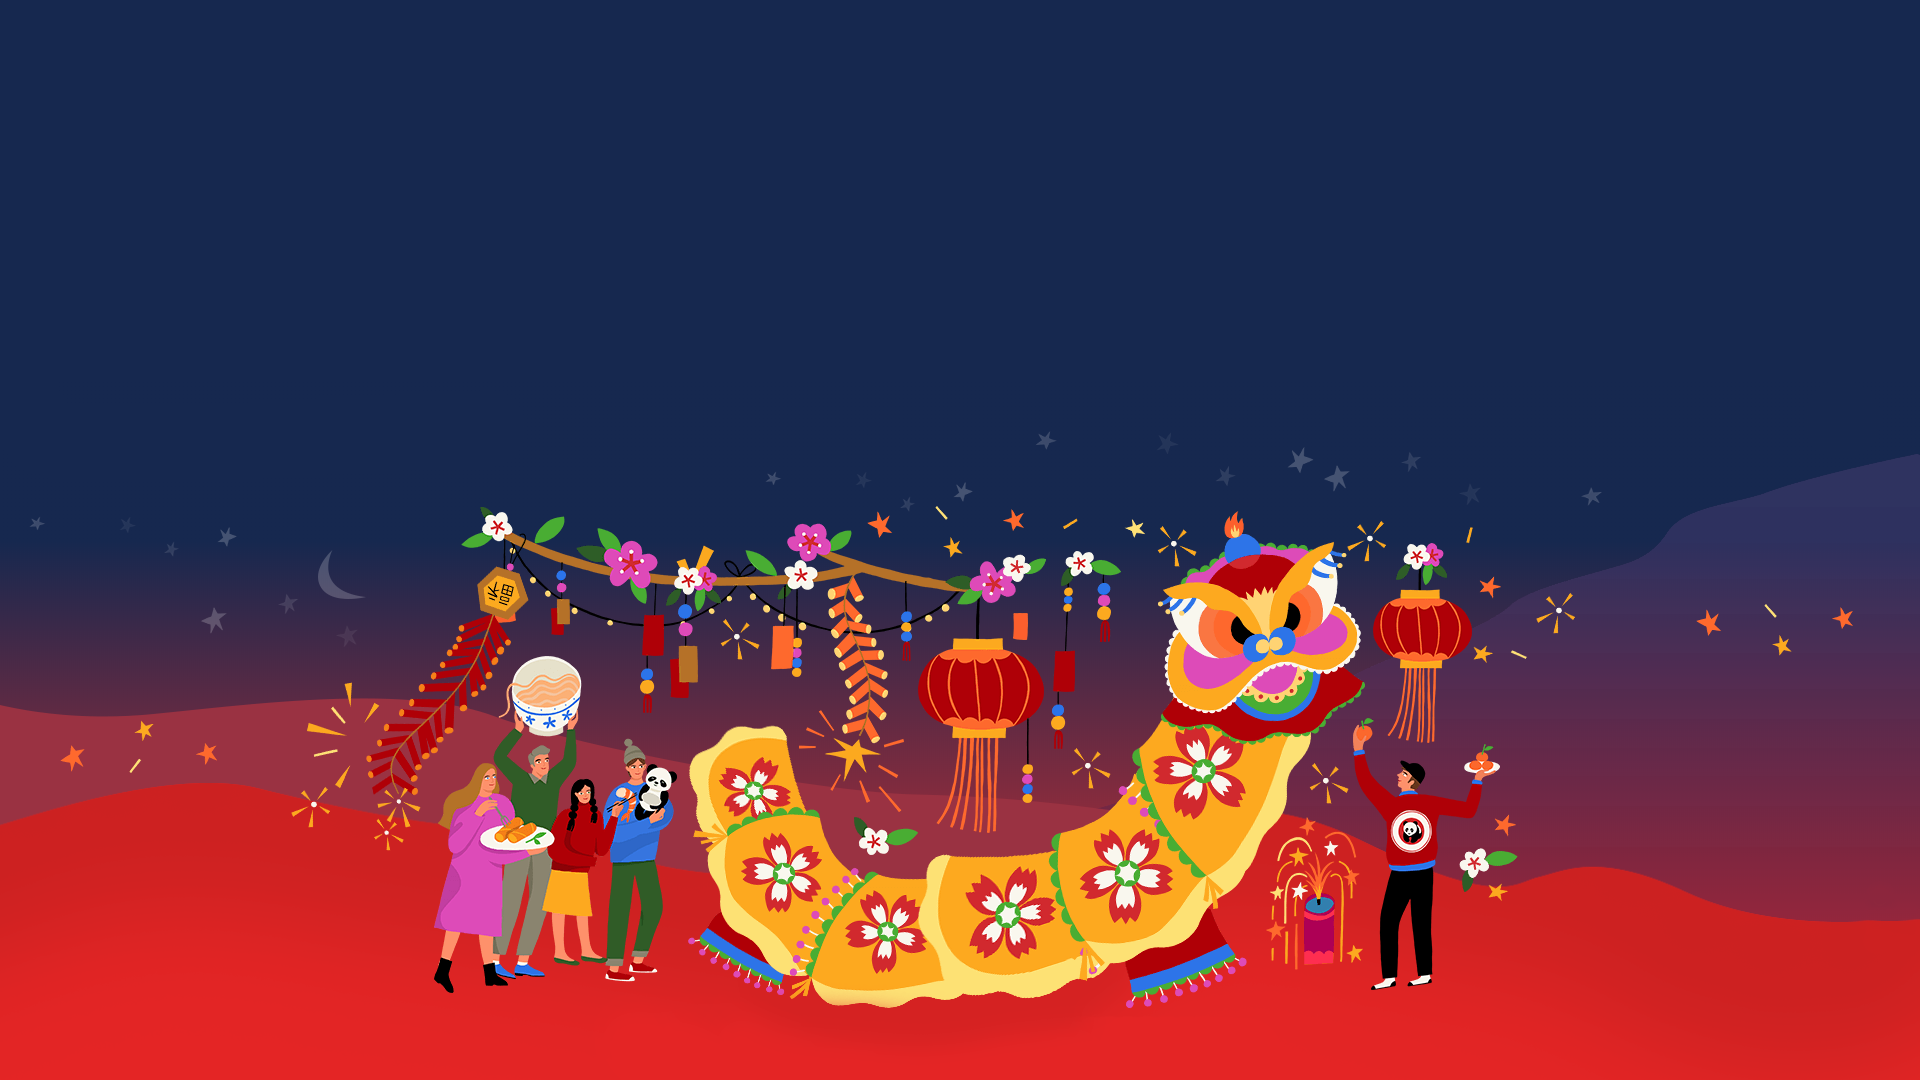 Panda Express Lunar New Year